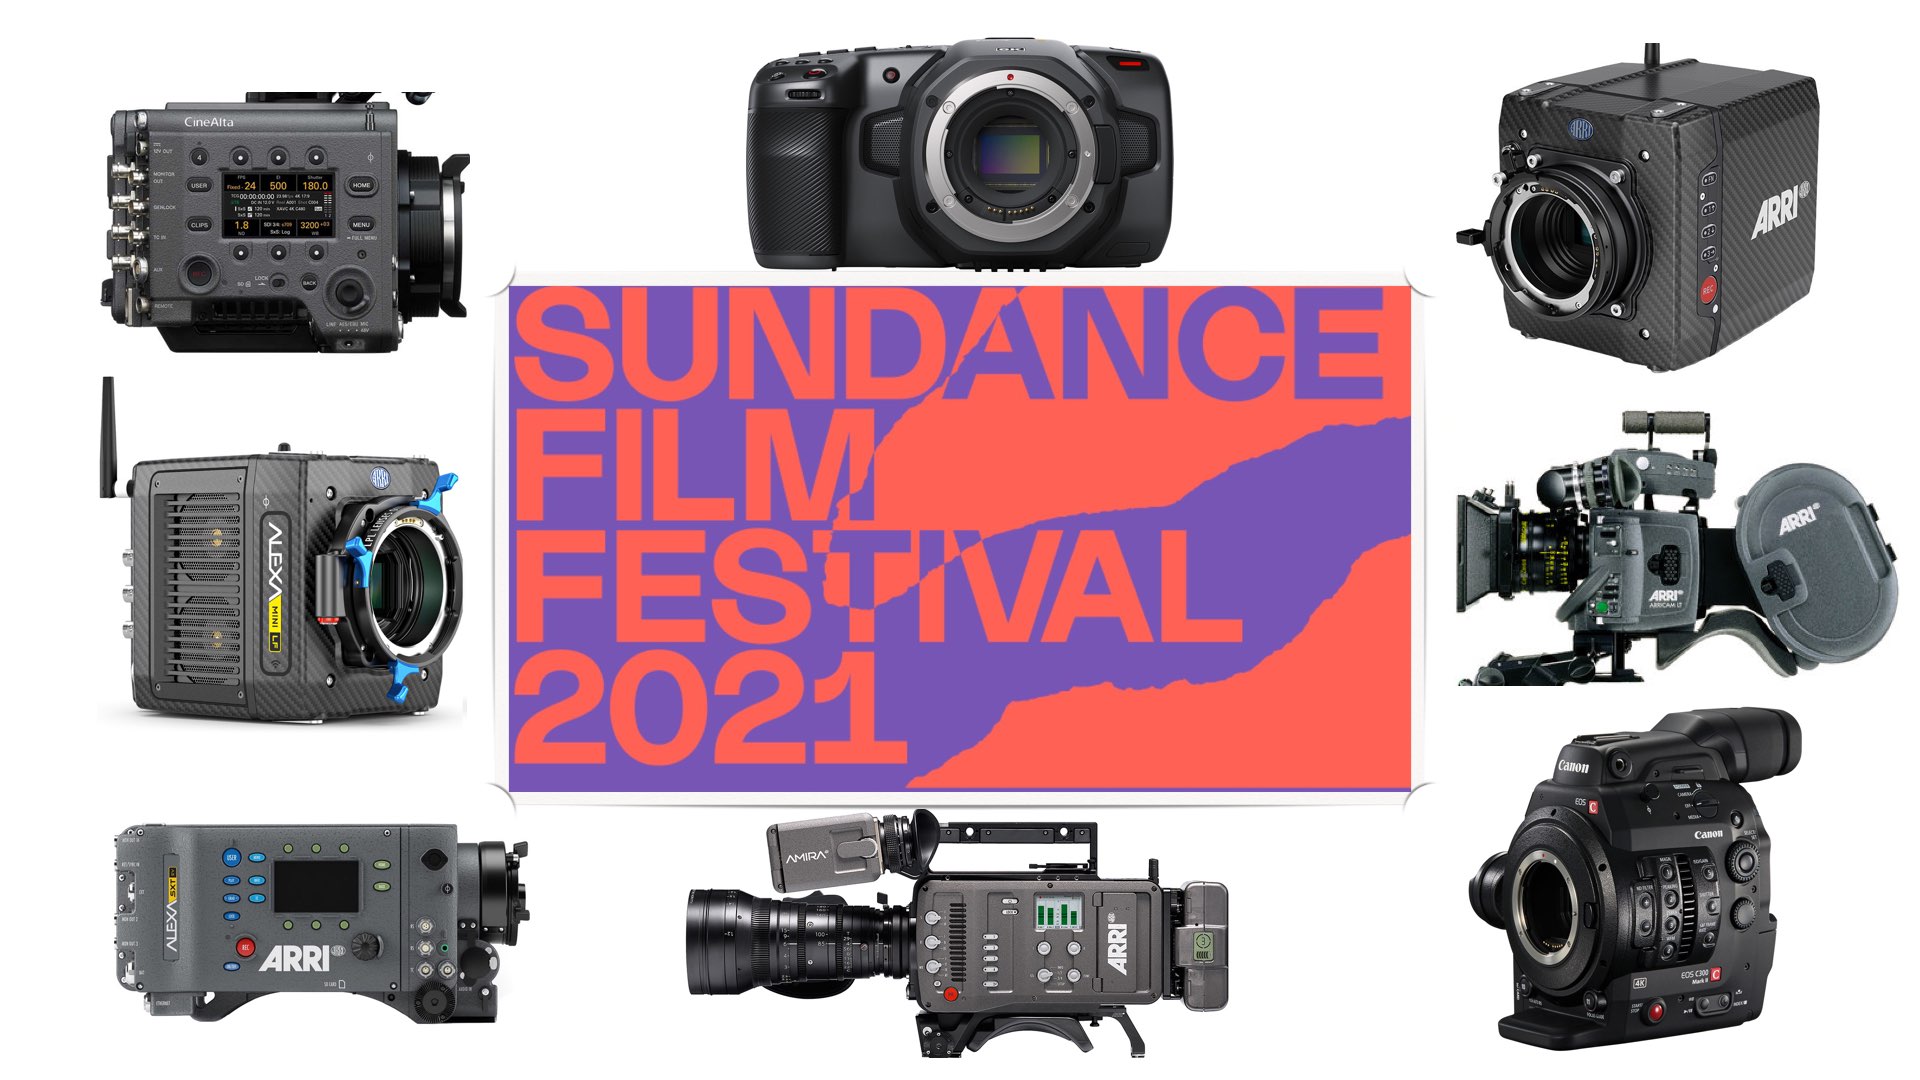 The cameras behind Sundance Film Festival 2021